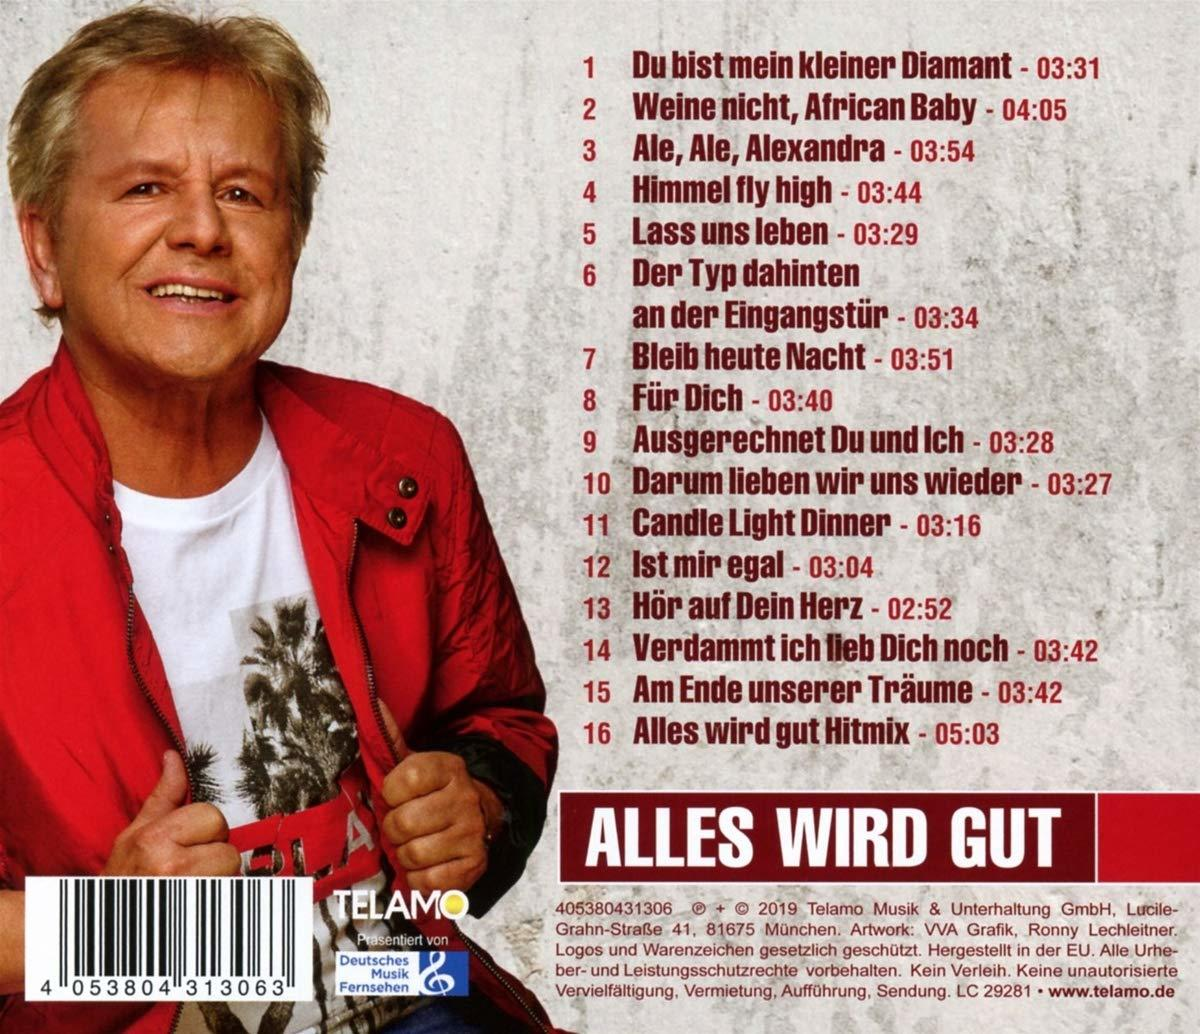 gut wird (CD) Anderson - Alles - G.G.